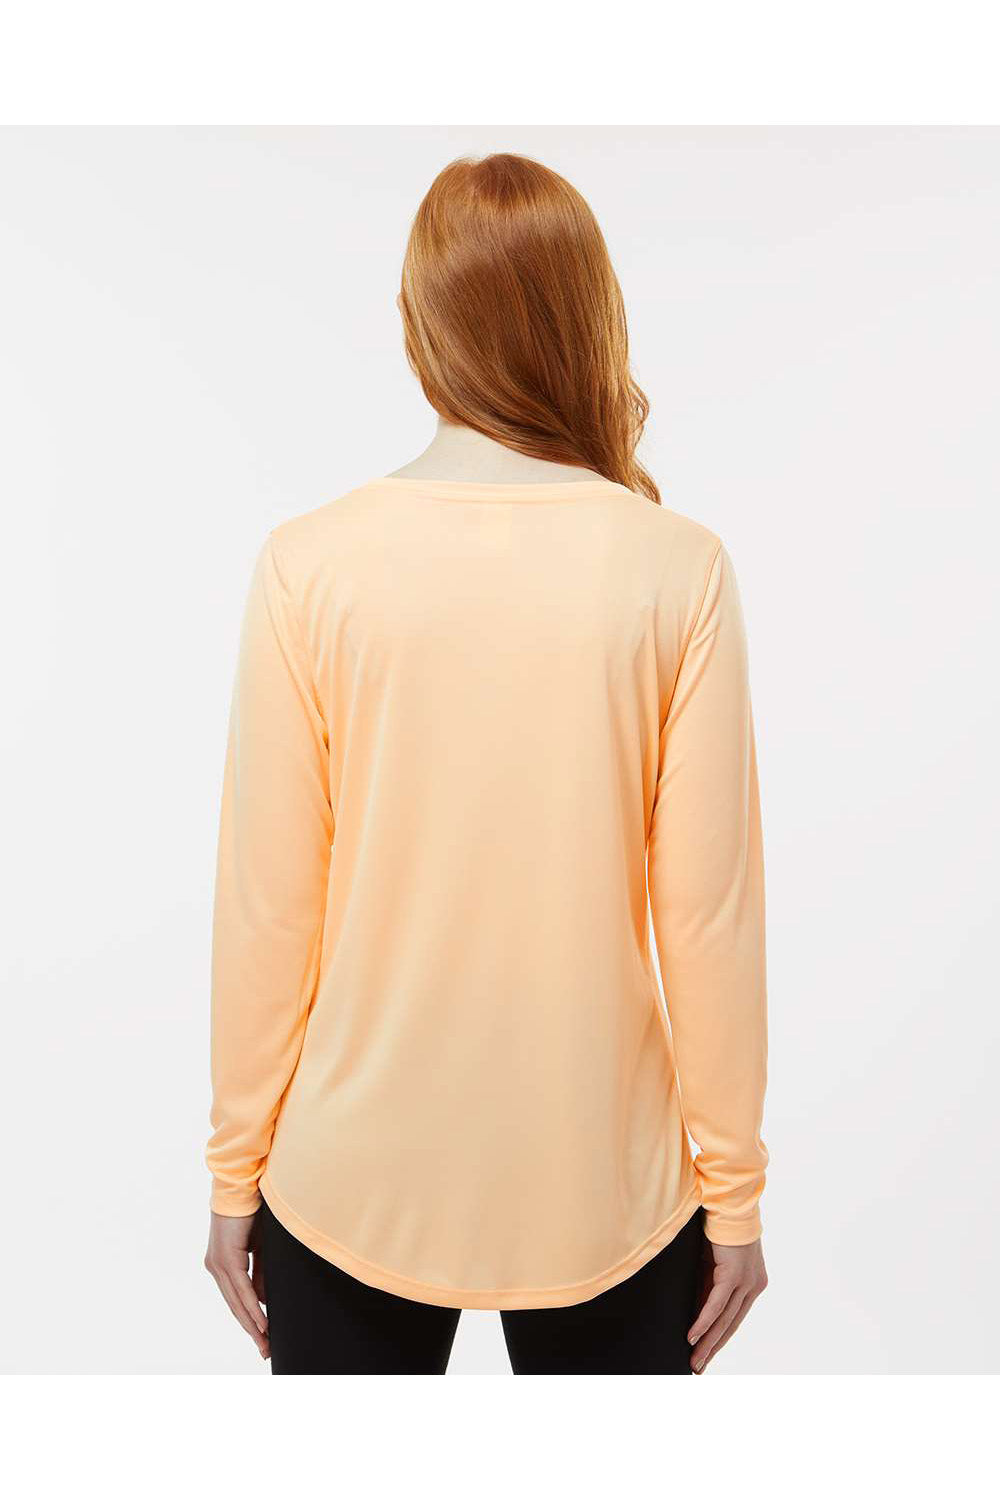 Paragon 214 Womens Islander Performance Long Sleeve Scoop Neck T-Shirt Peach Model Back